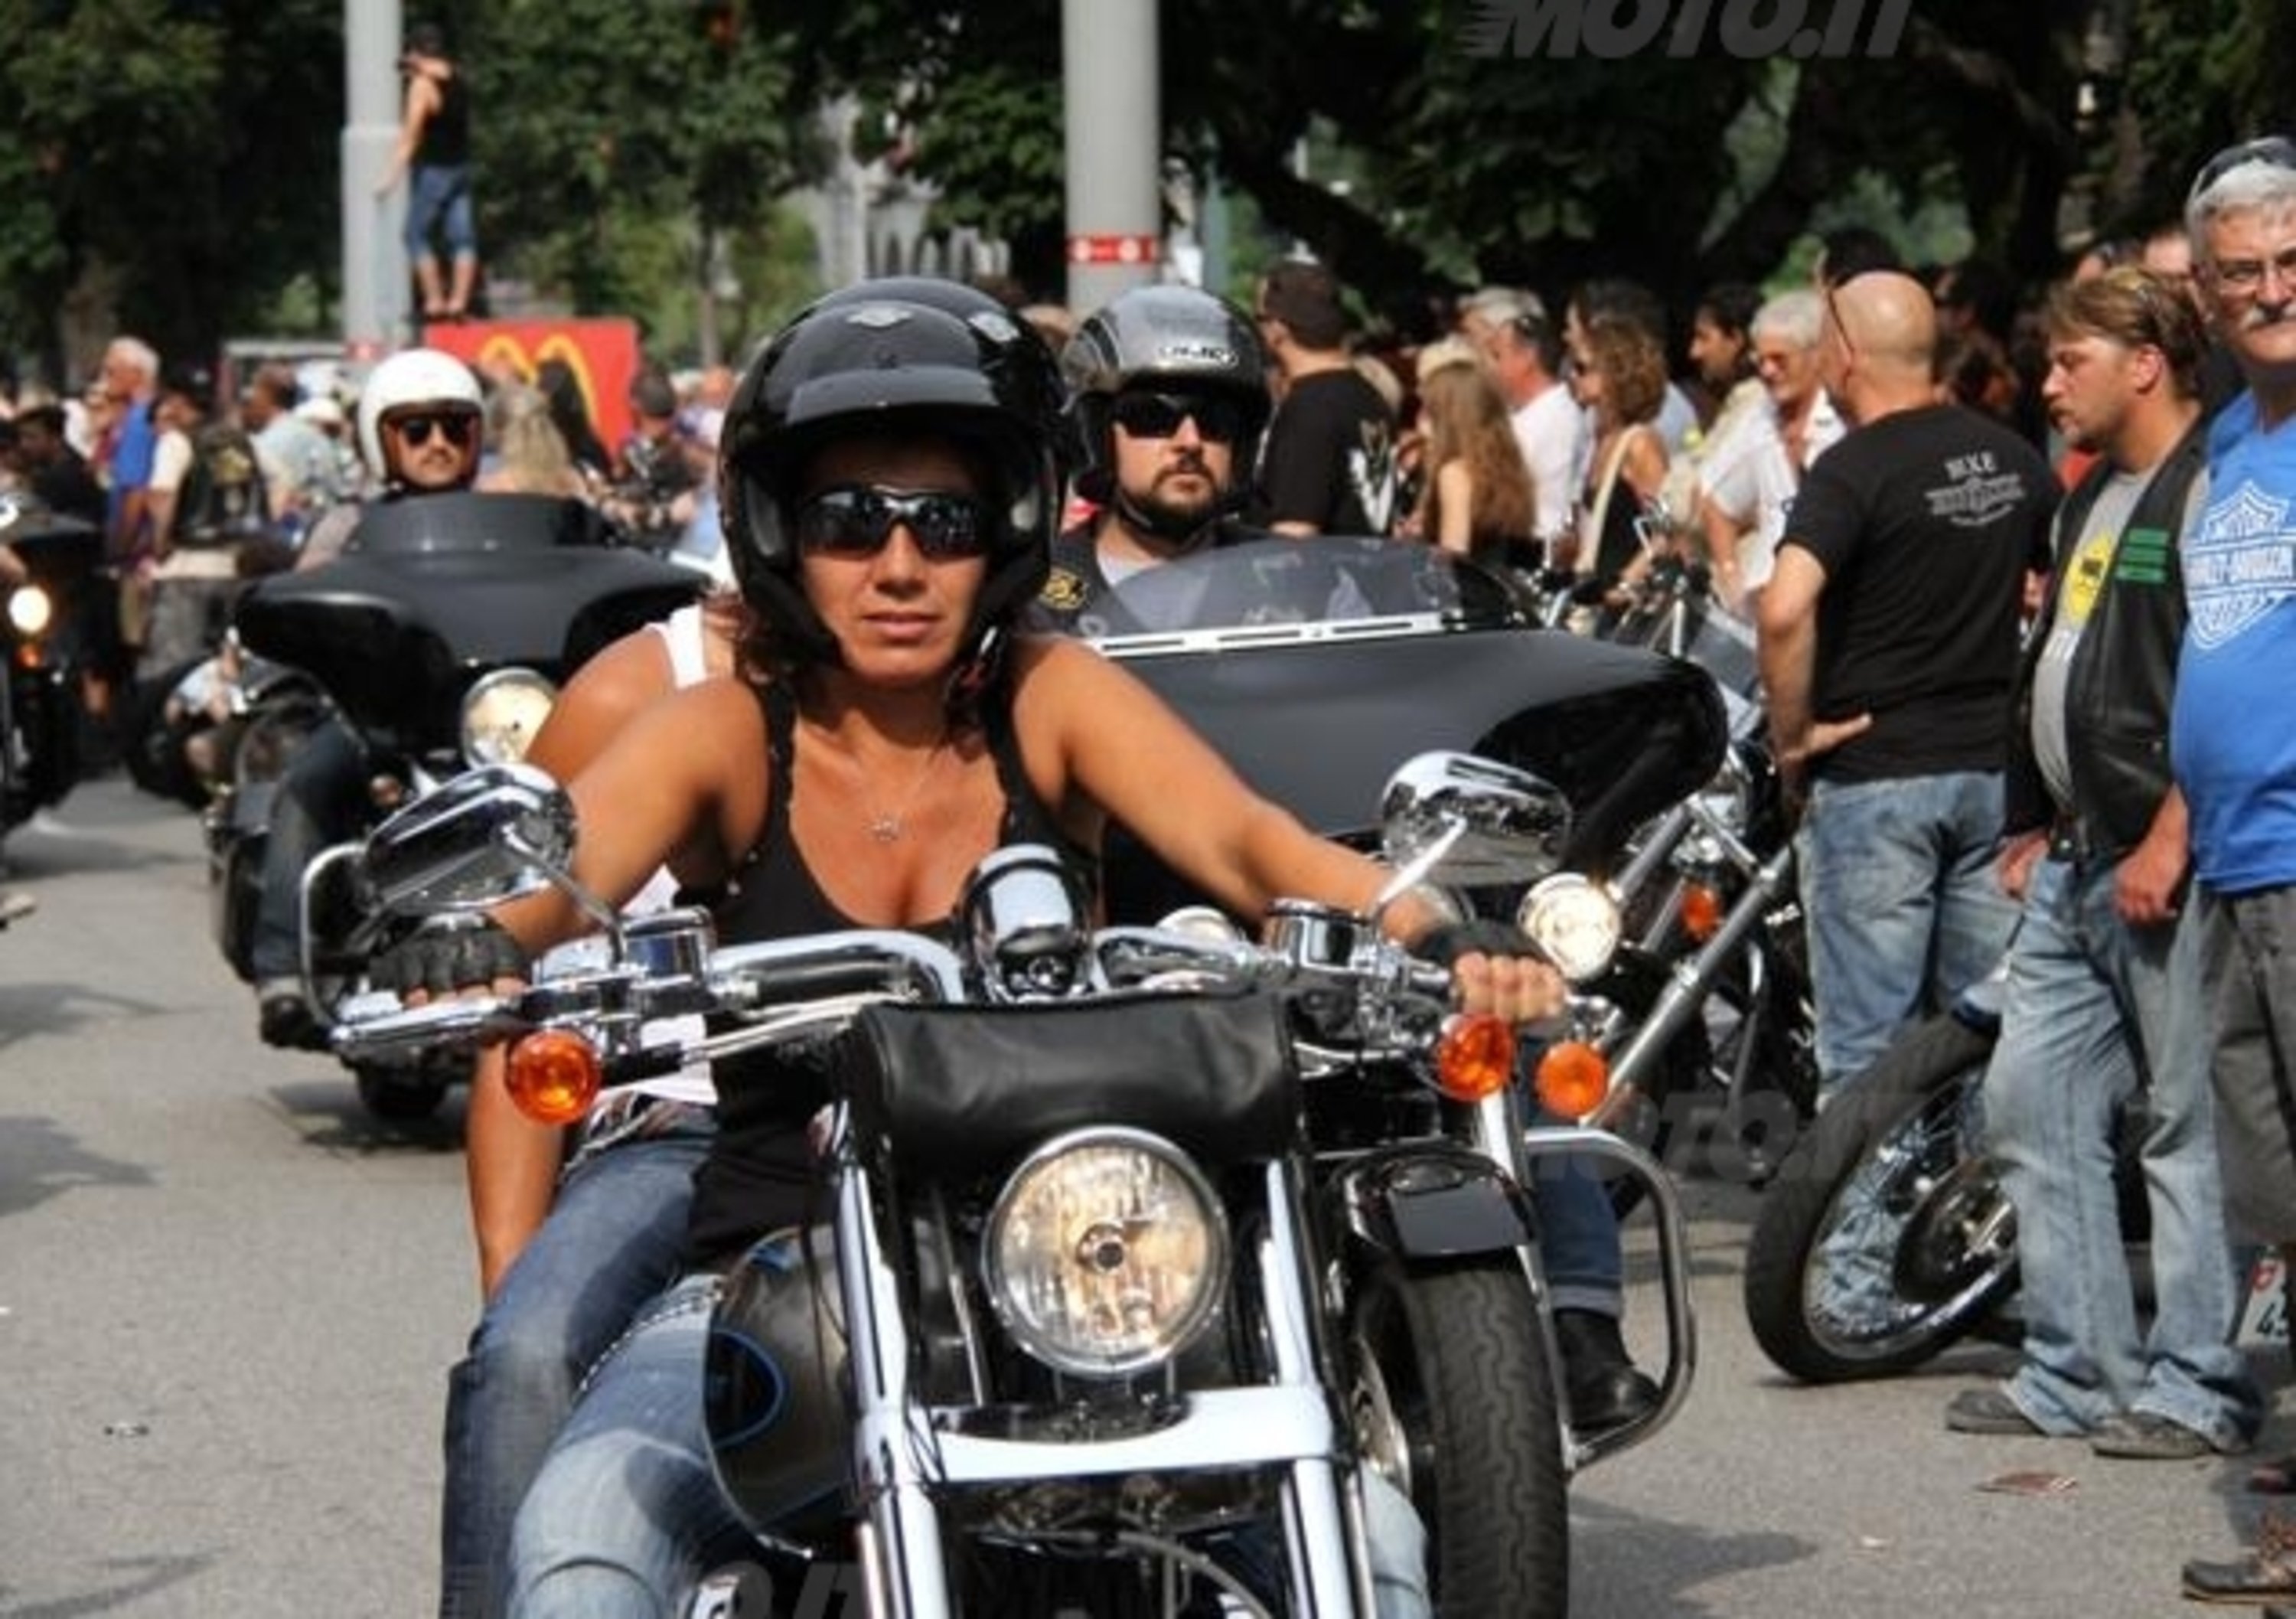 BIG TITS, i LIKE IT !, Swiss Harley Day, Lugano 9.7.11